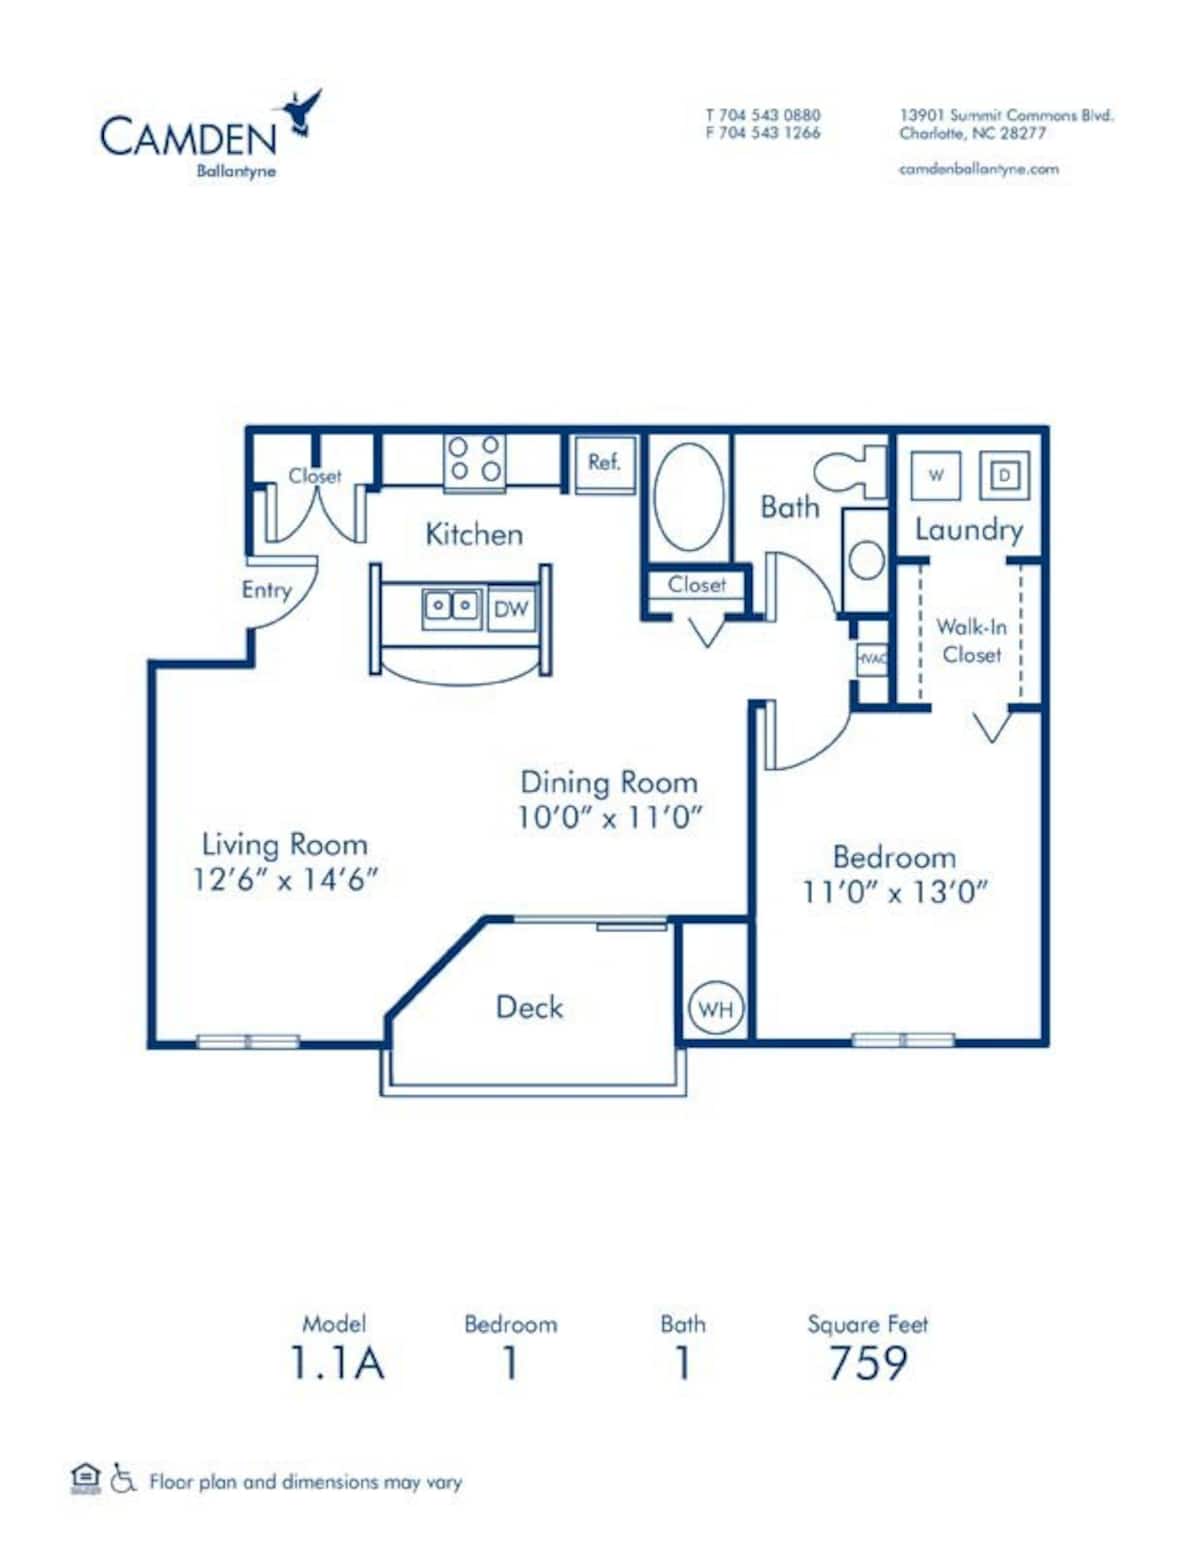 Floorplan diagram for 1.1A, showing 1 bedroom